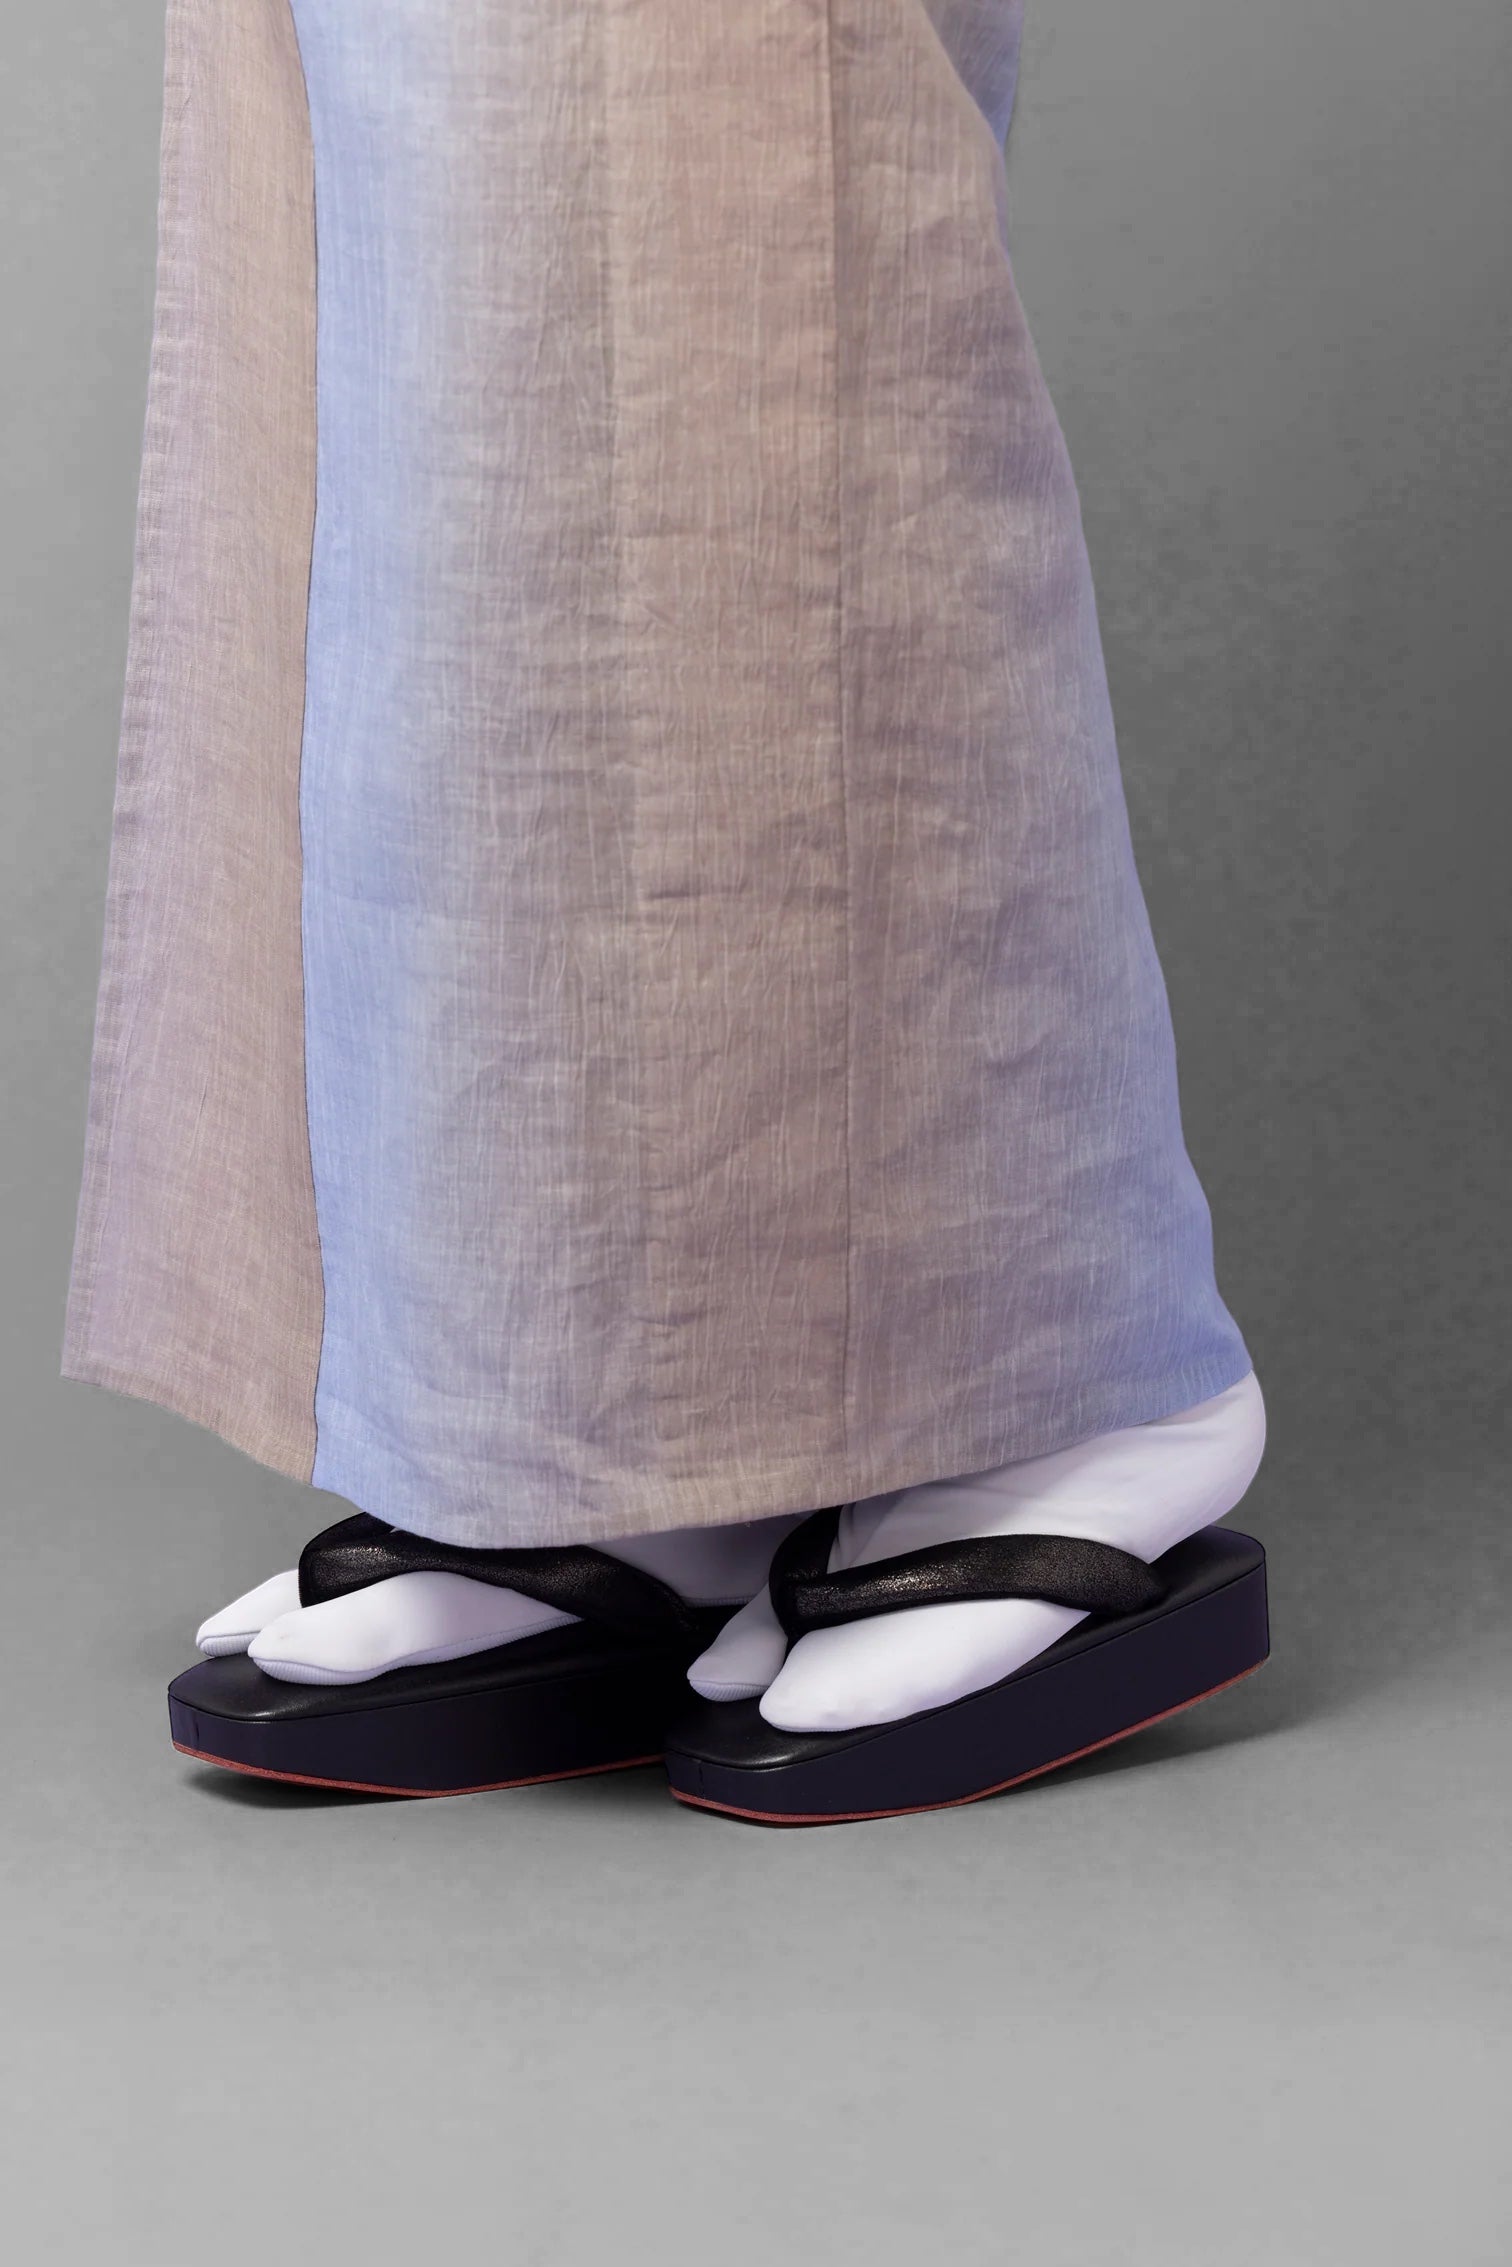 Gradation Omijiji beige light blue (SLADKY): Single garment | Linen | Cotton